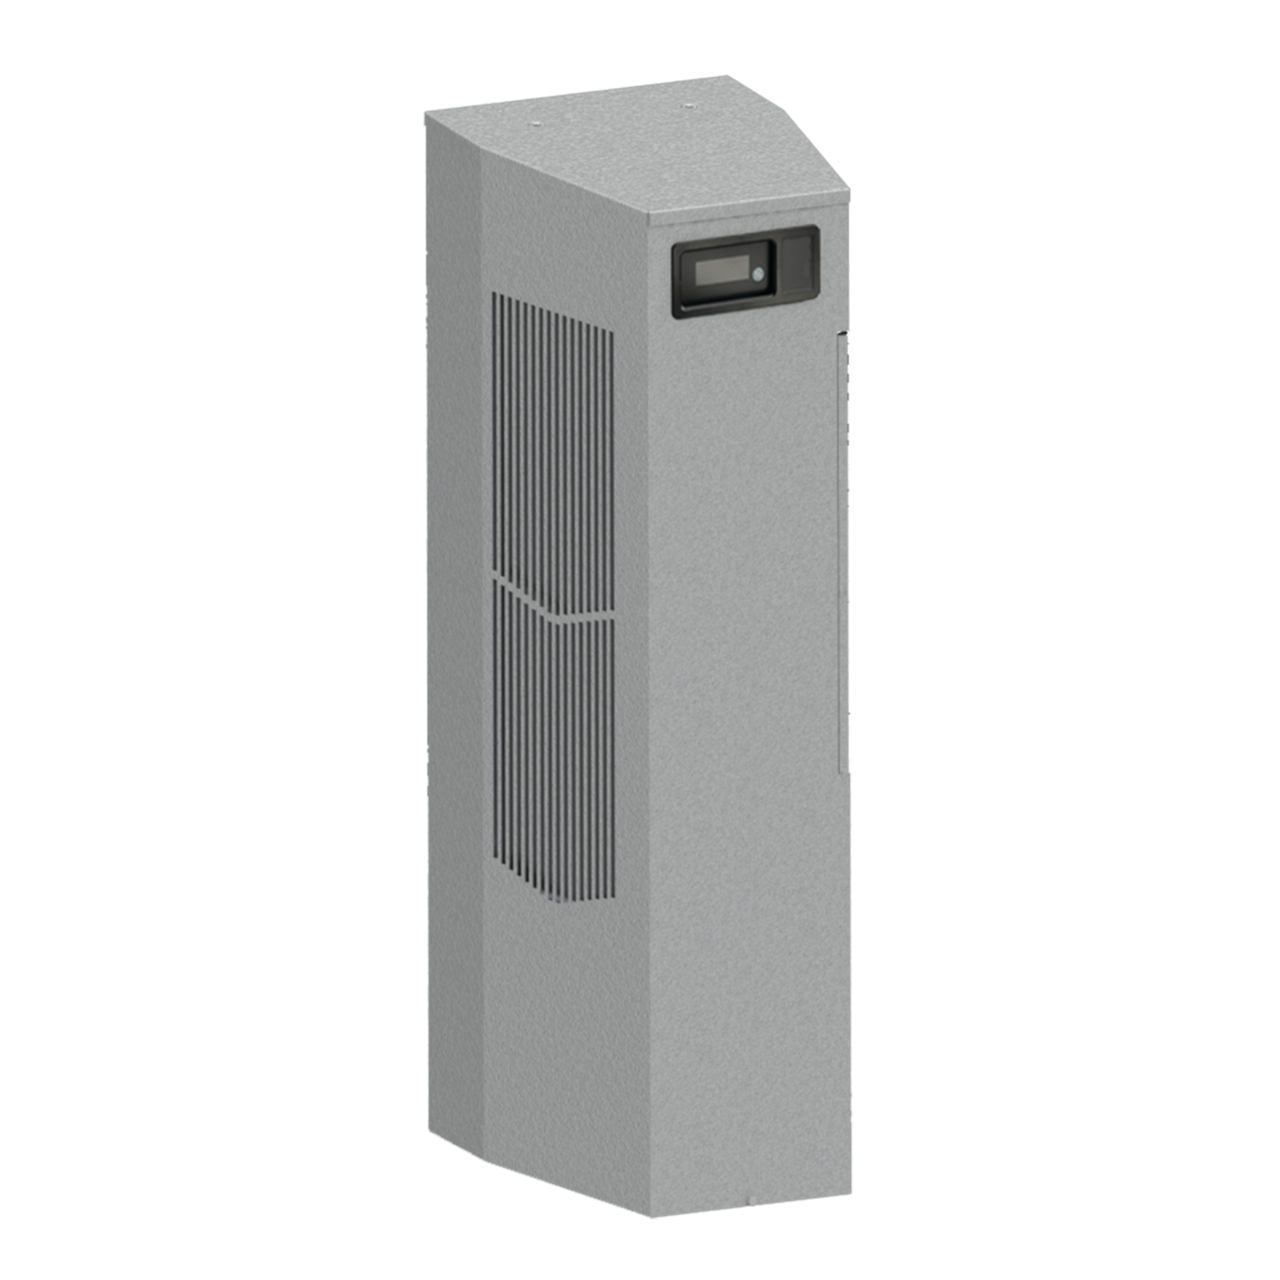 nVent HOFFMAN Spectracool™ N360616G100 MCLG Outdoor Narrow Enclosure Air Conditioner, 115 VAC, 10.1 A, 50/60 Hz, NEMA 3R/4/12 Enclosure, 6000 Btu/hr